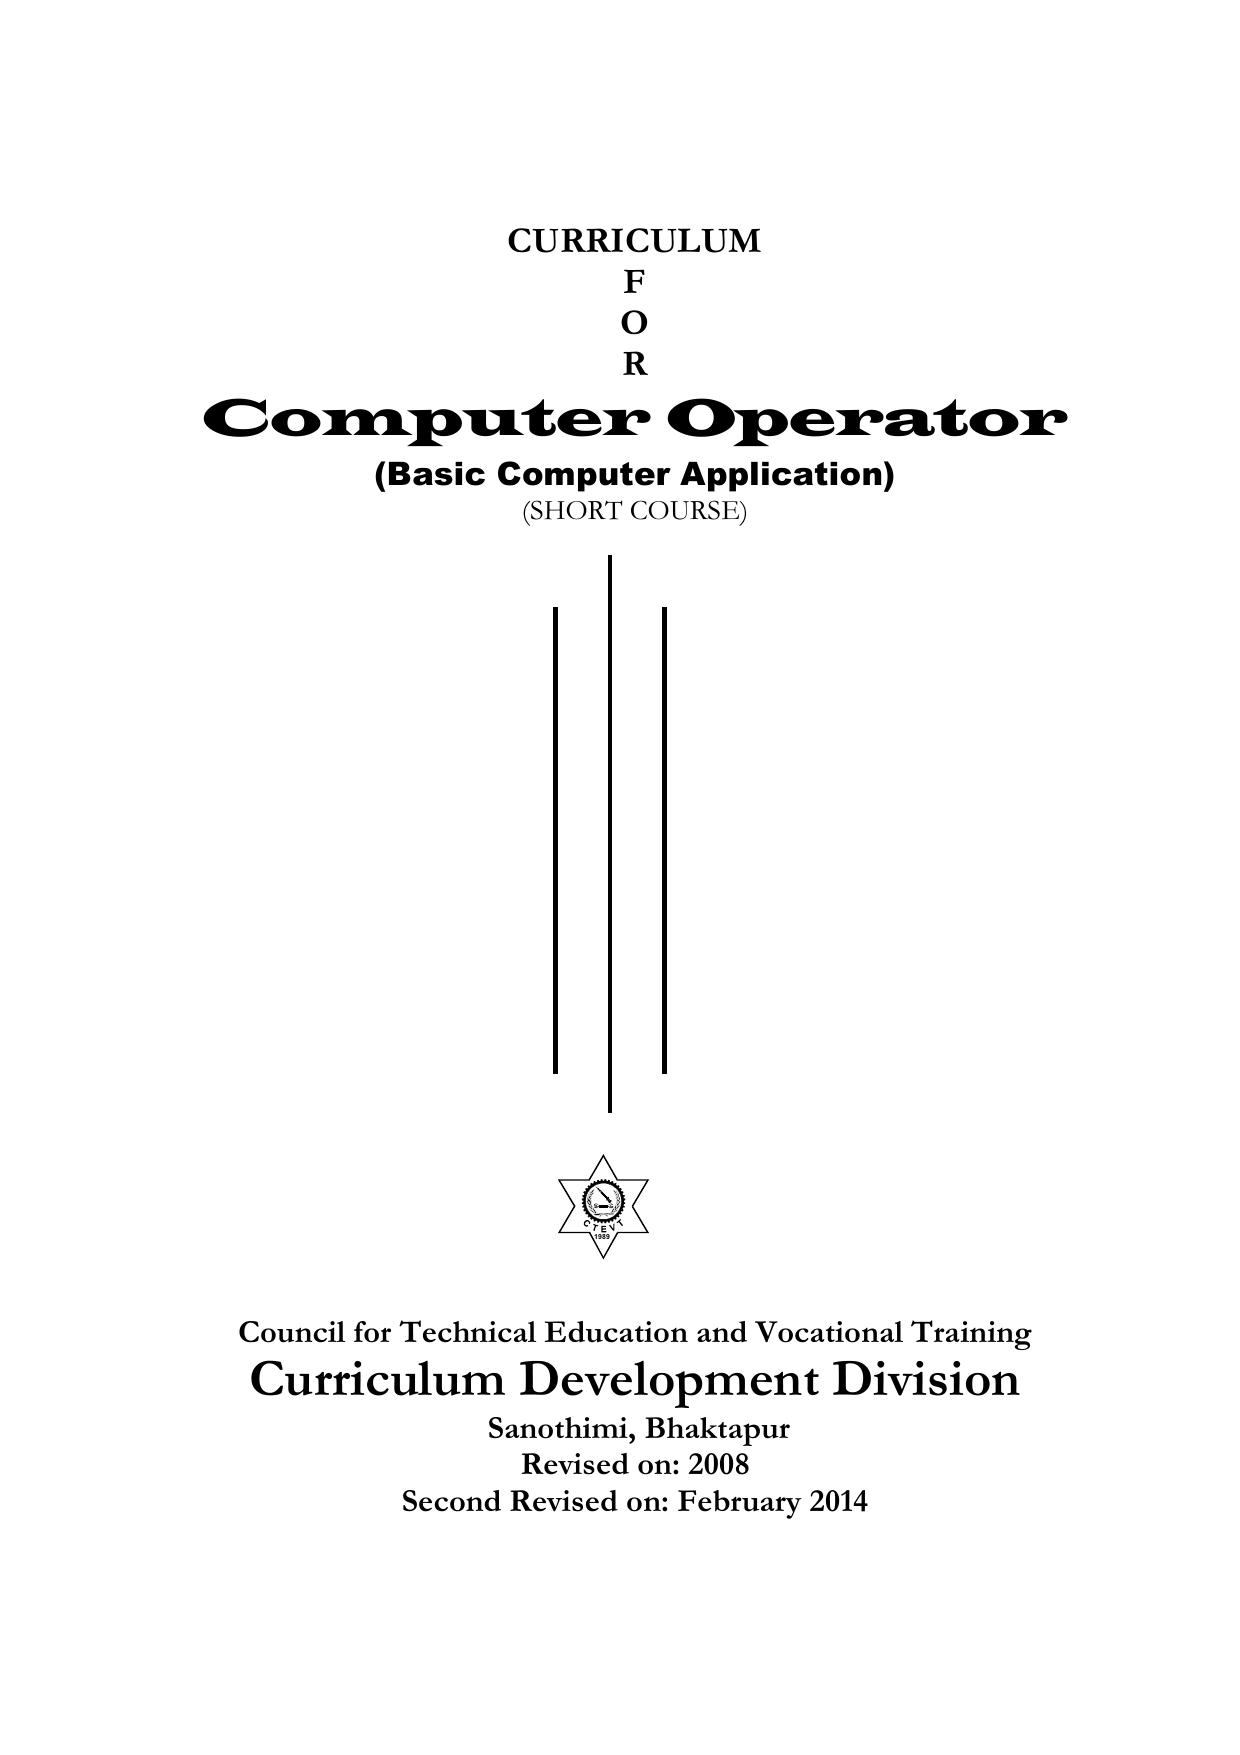 Computer Operator, 2014